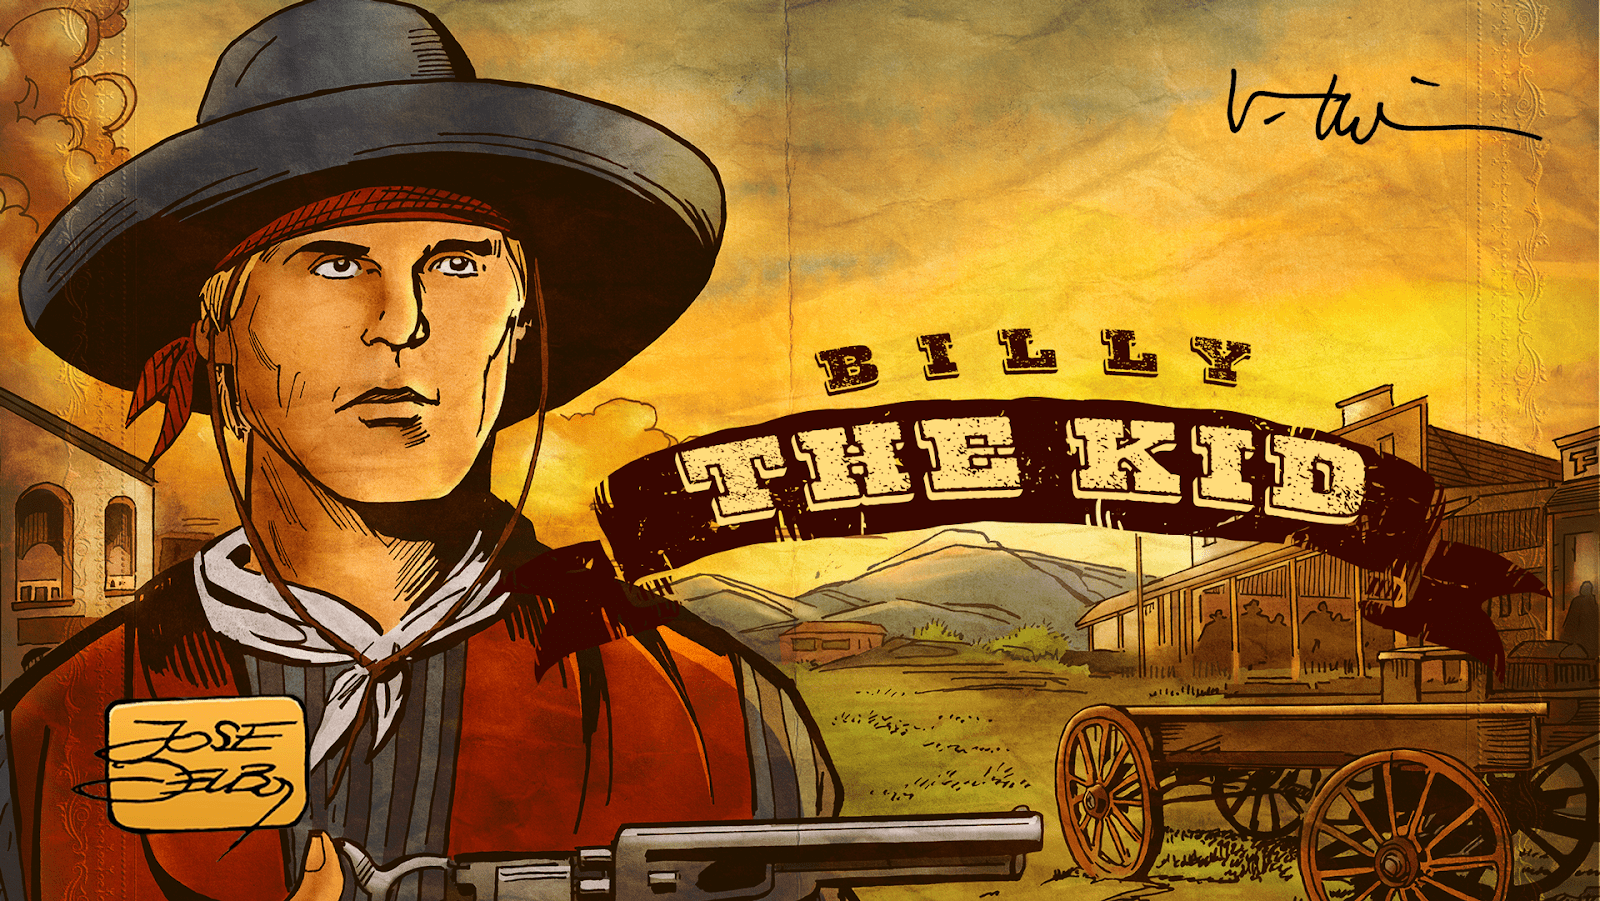 Billy the Kid by Val Kilmer & Jose Delbo